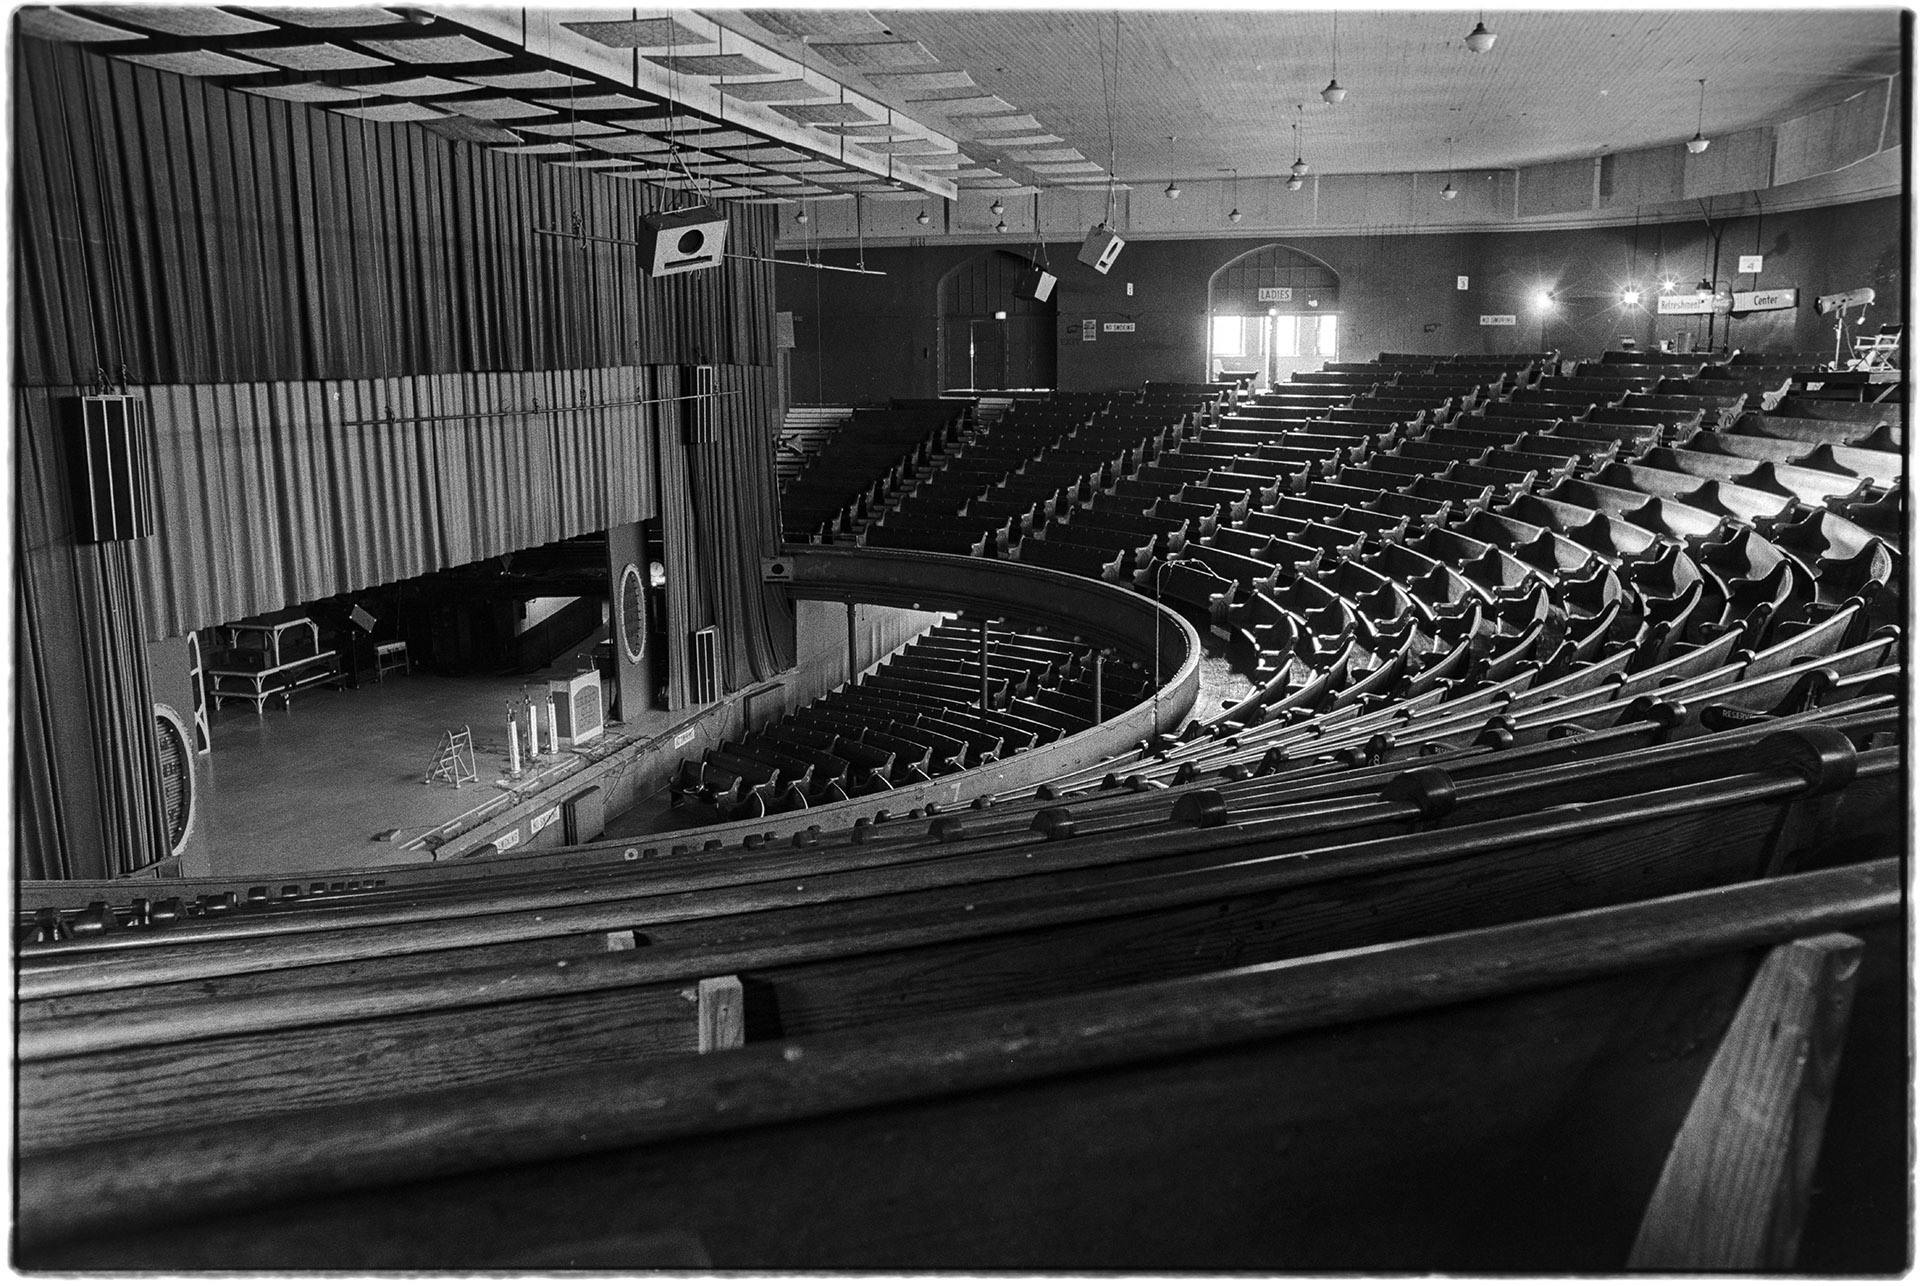 Still image of the Ryman Auditorium in Nashville, Tennessee